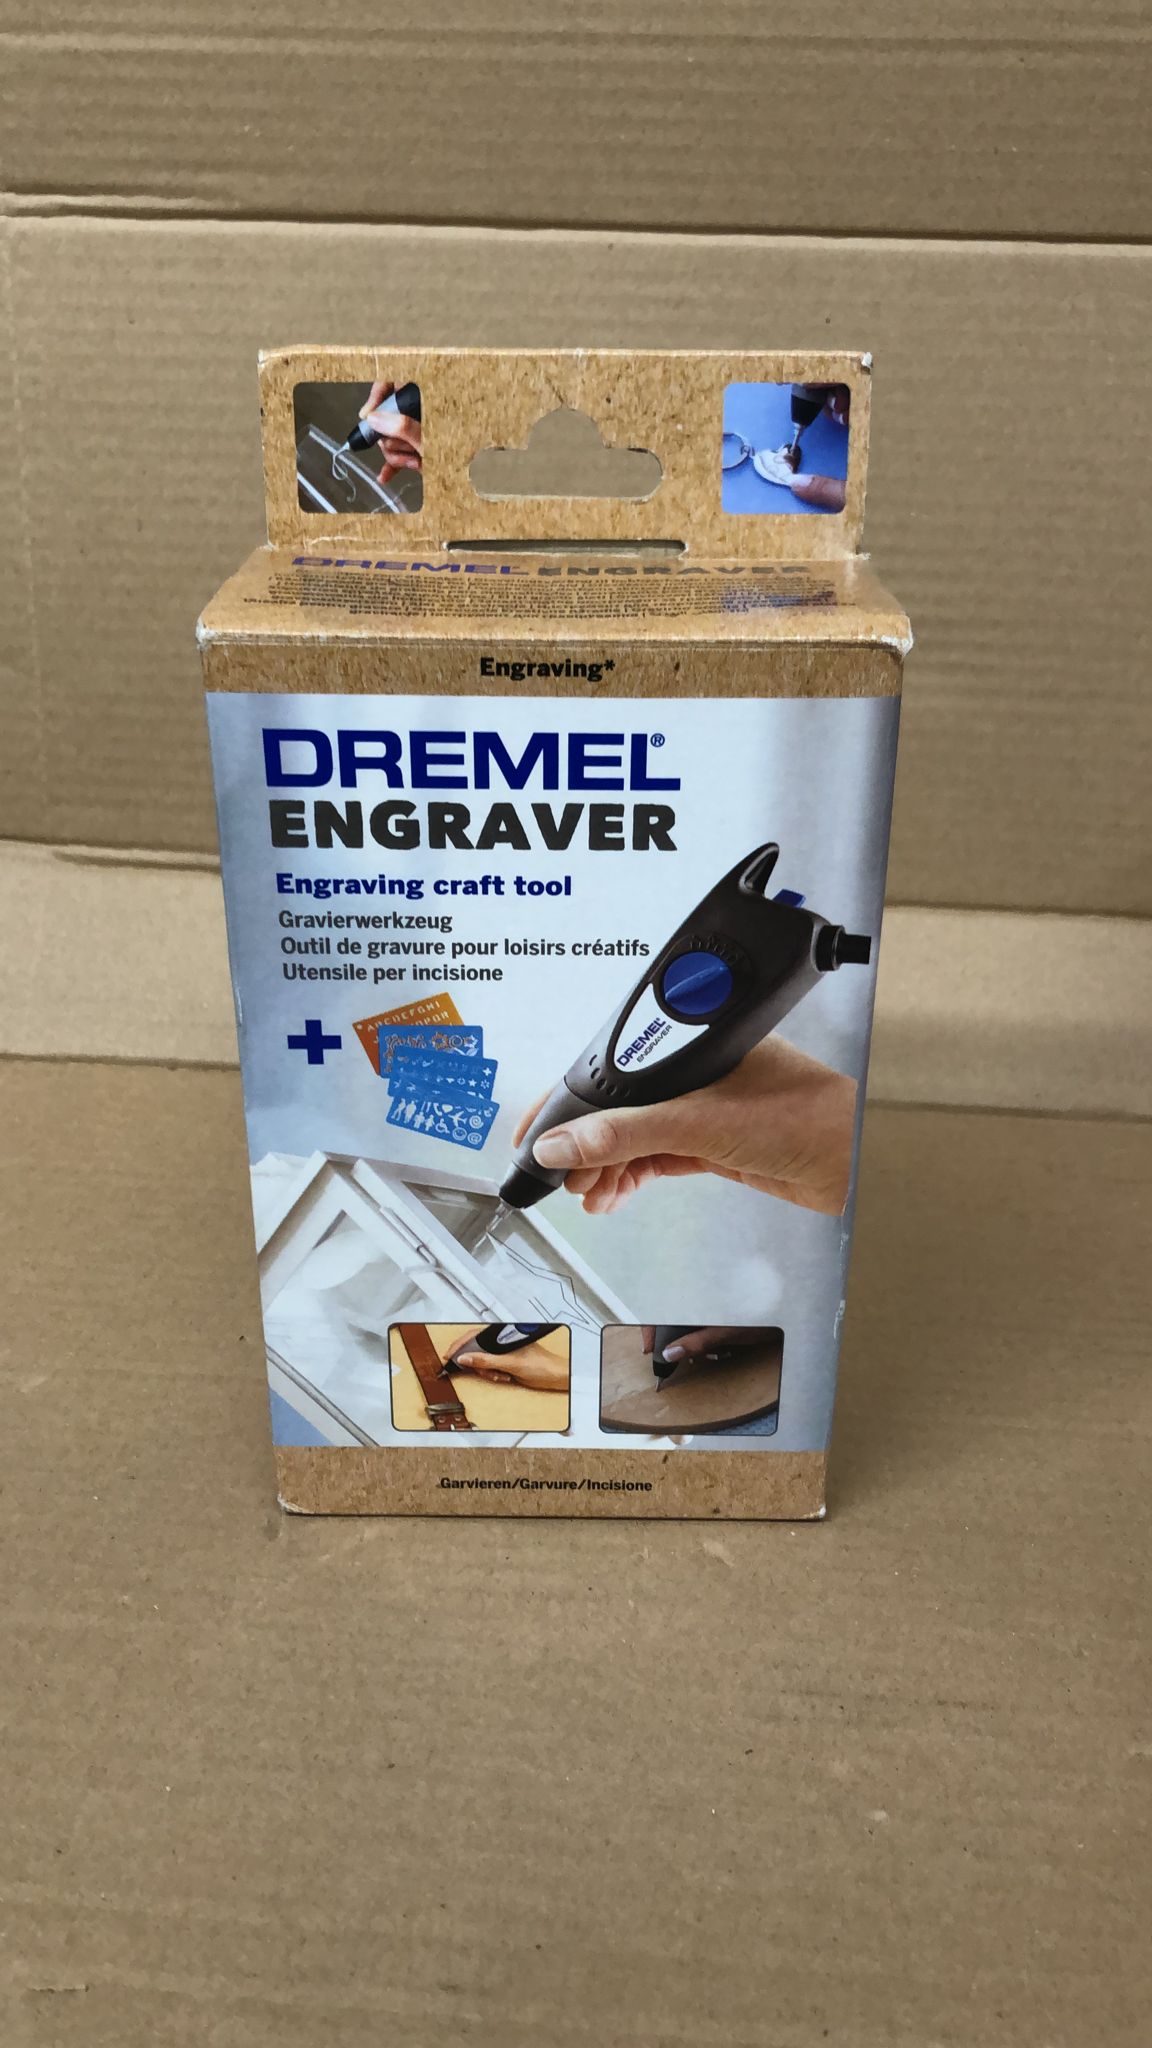 Dremel 290 Engraver - Compact Engraving Pen Tool-2903